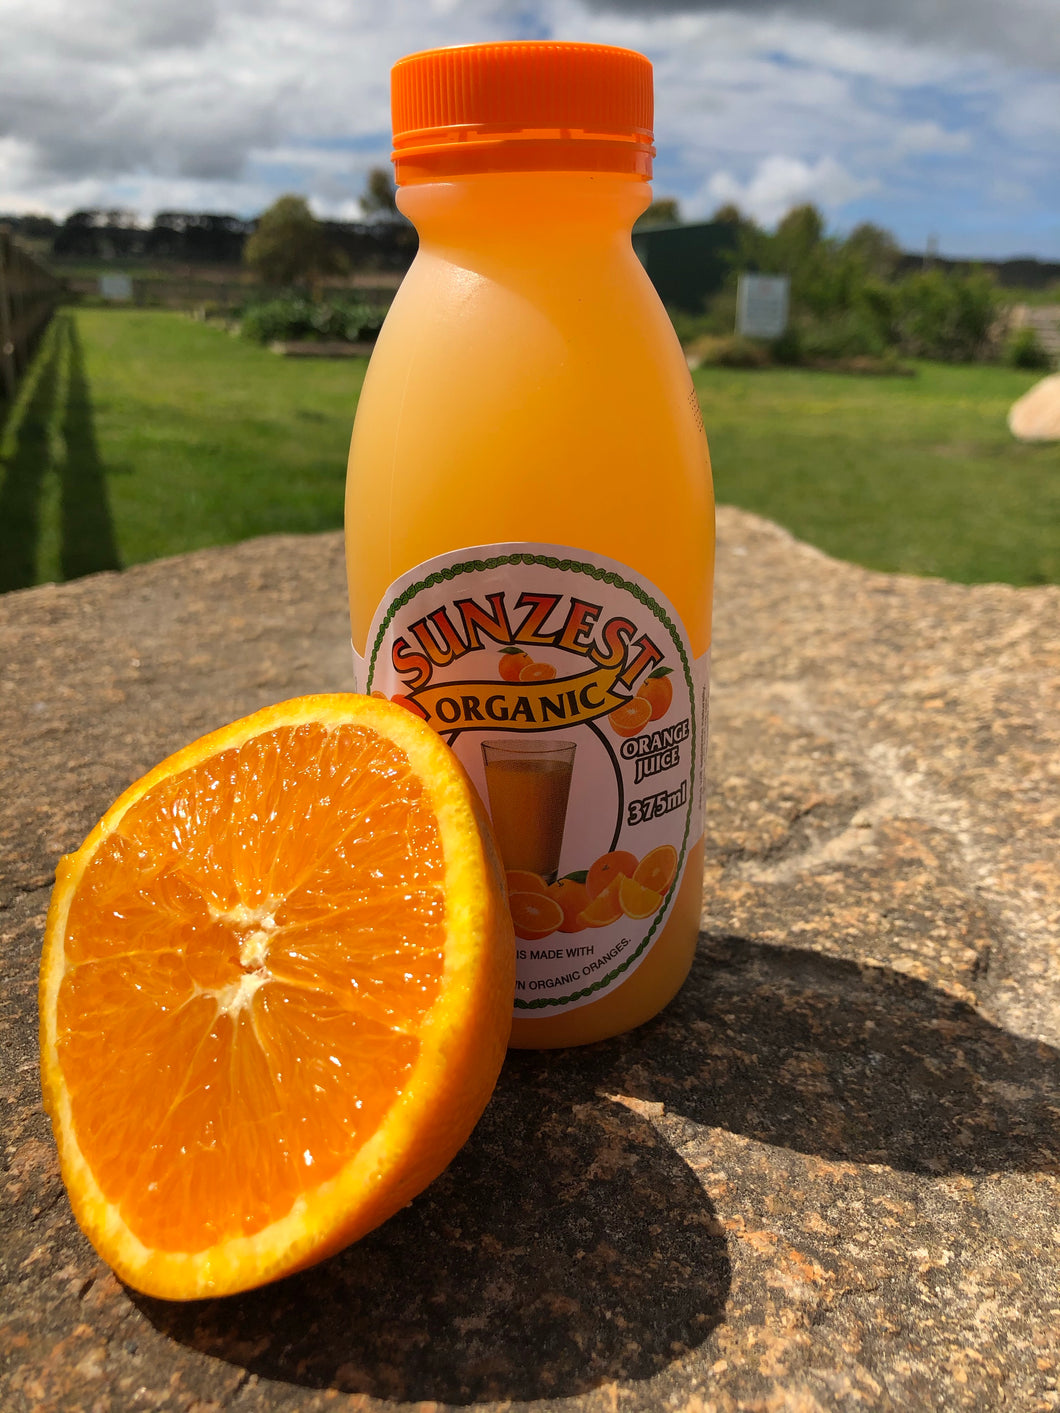 Sunzest Organic Orange Juice (375ml)